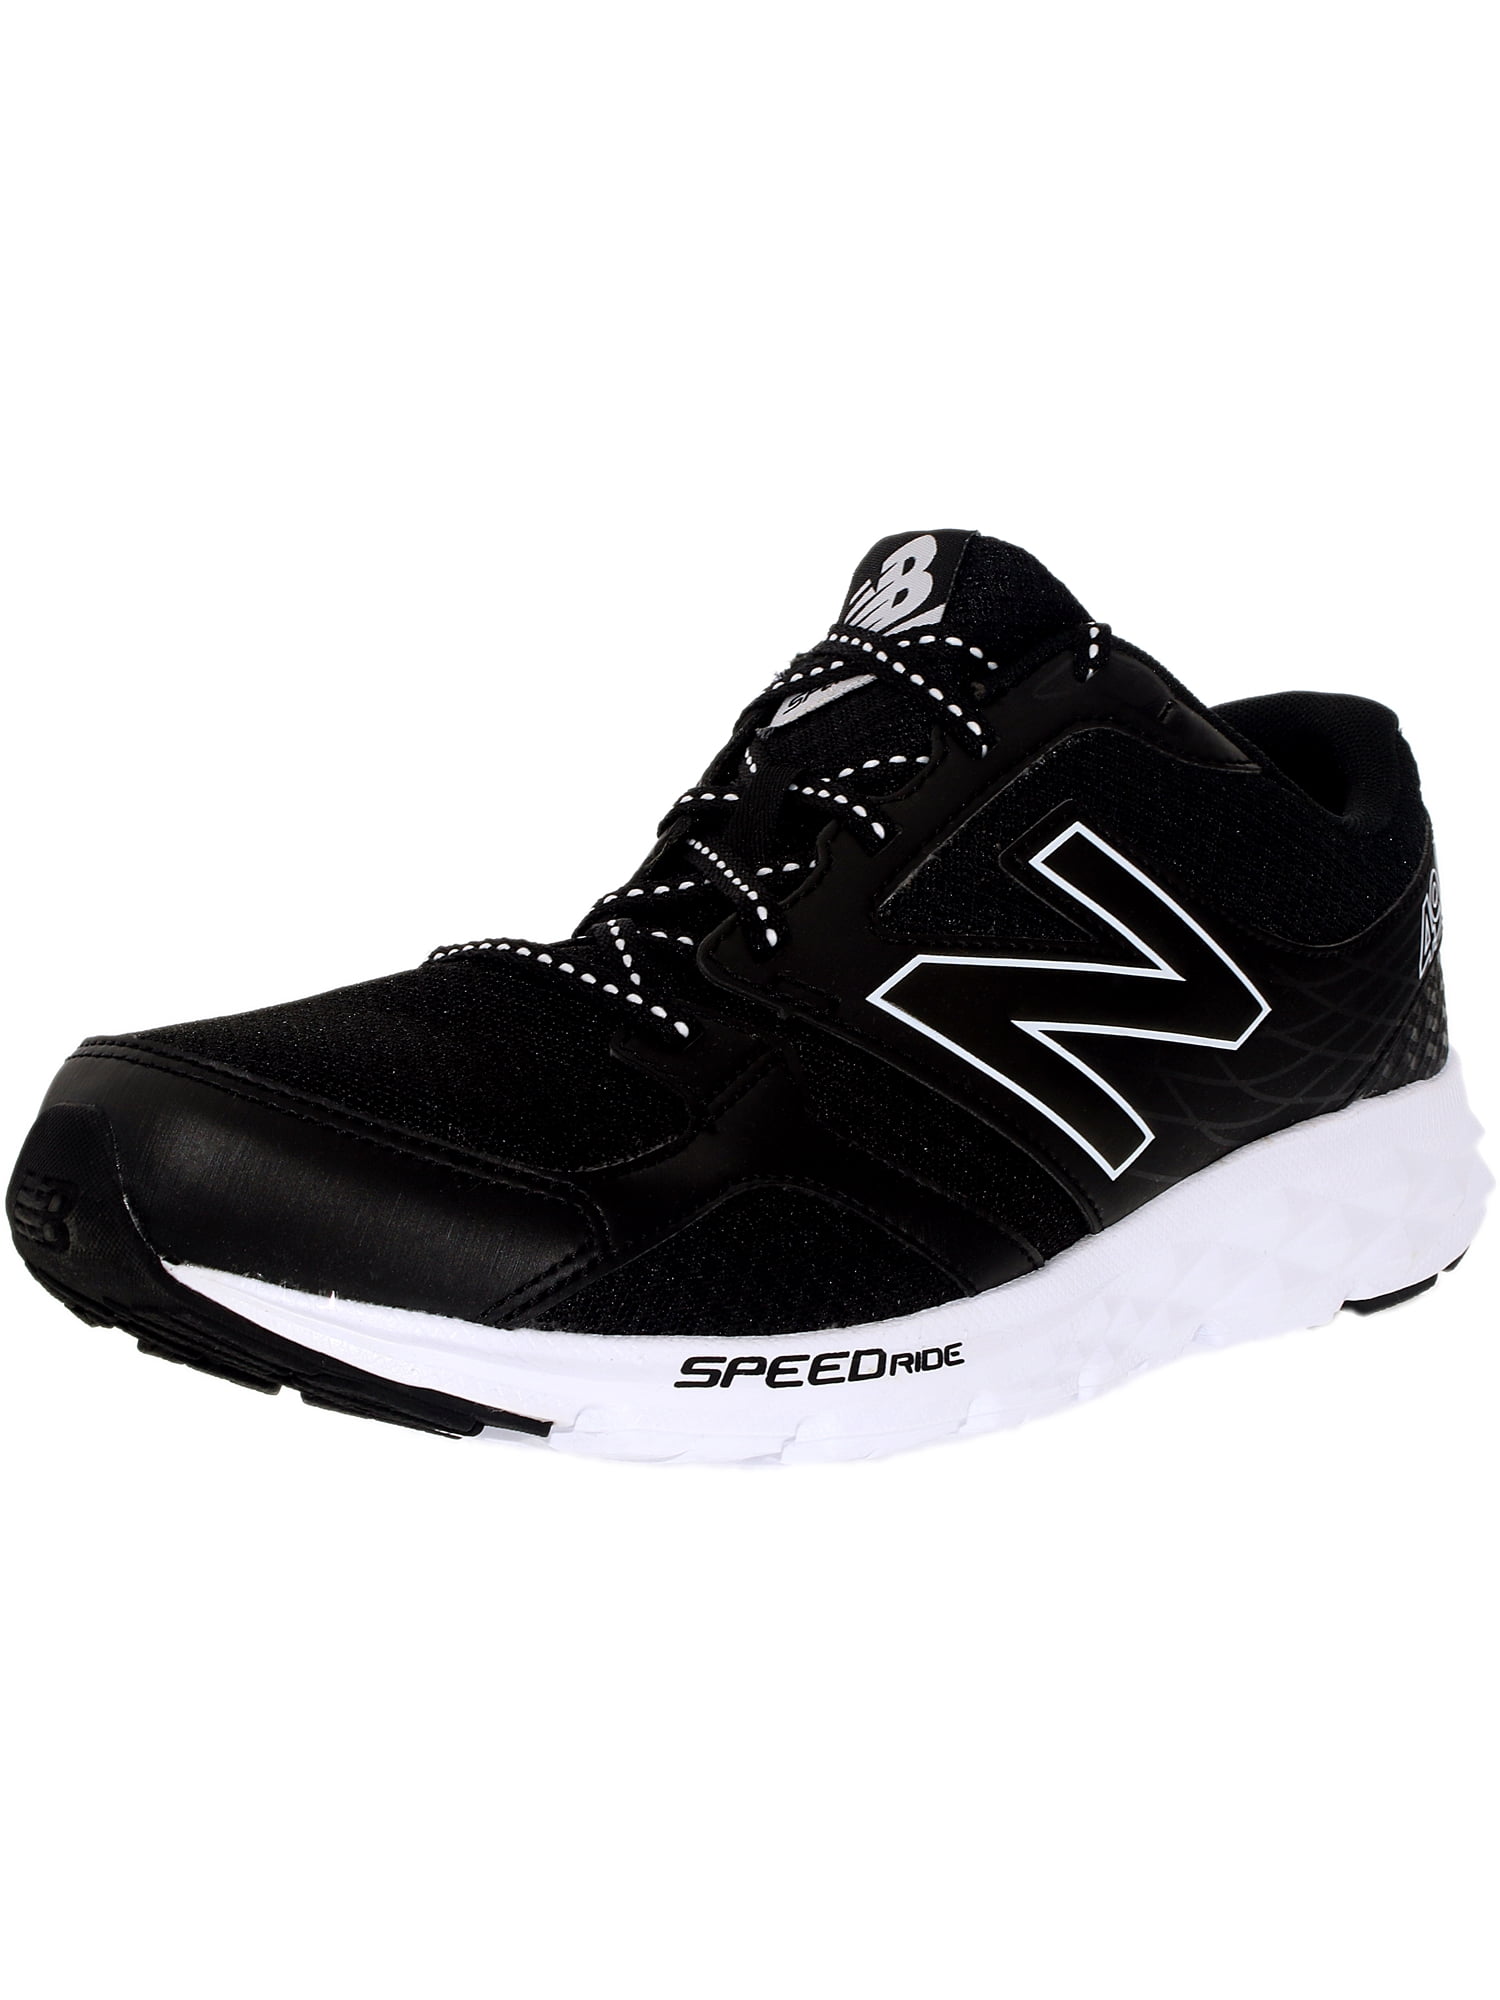 New Balance Men's Running Course Black/White Low Top Mesh Shoe - 10.5M ...